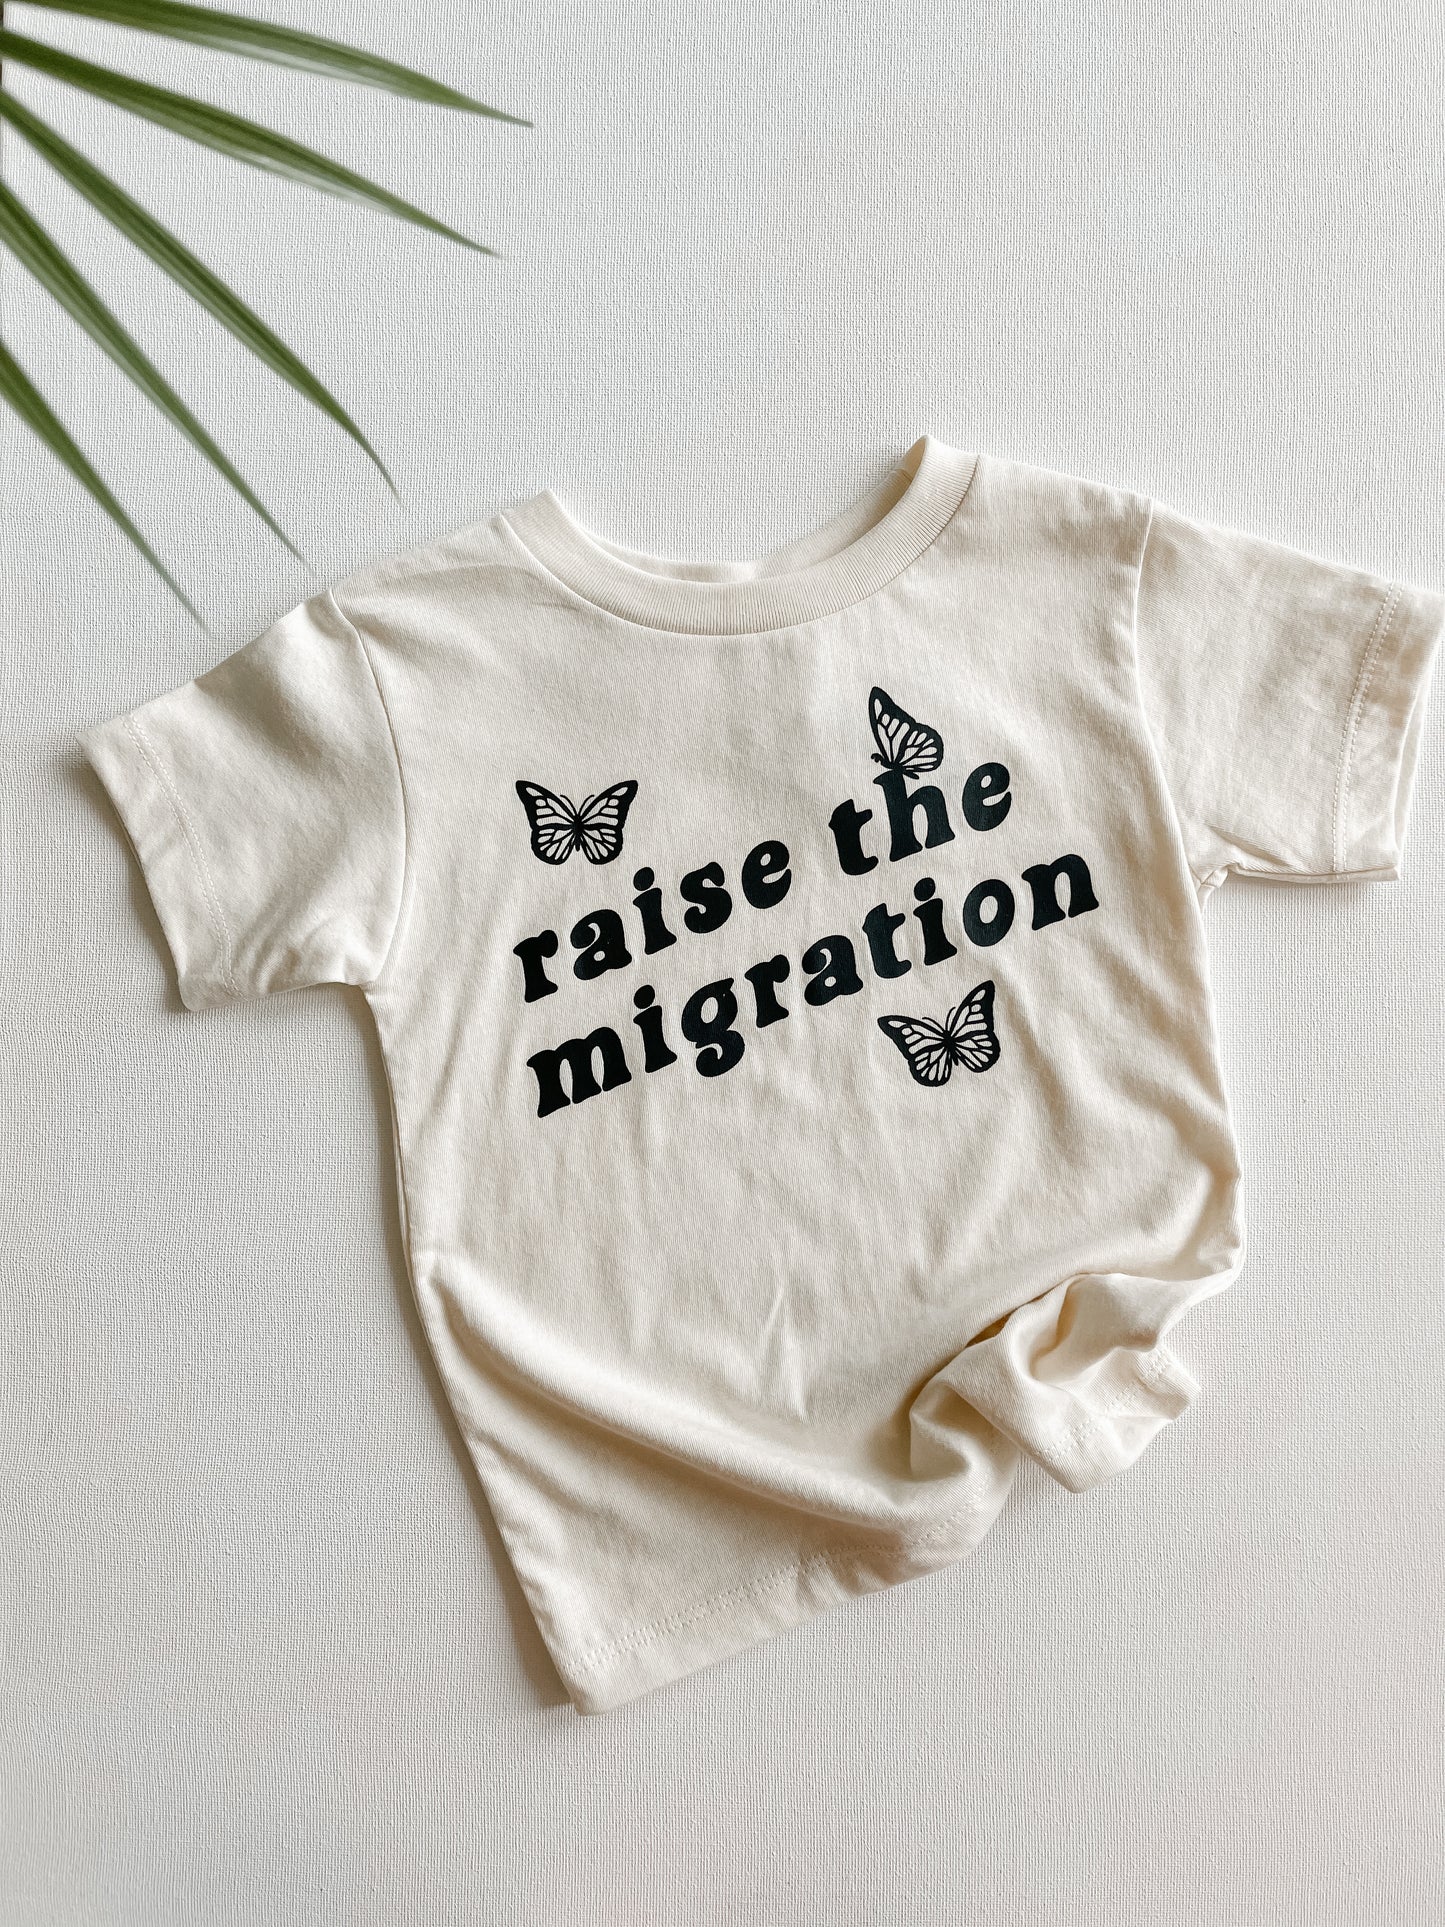 raise the migration tee